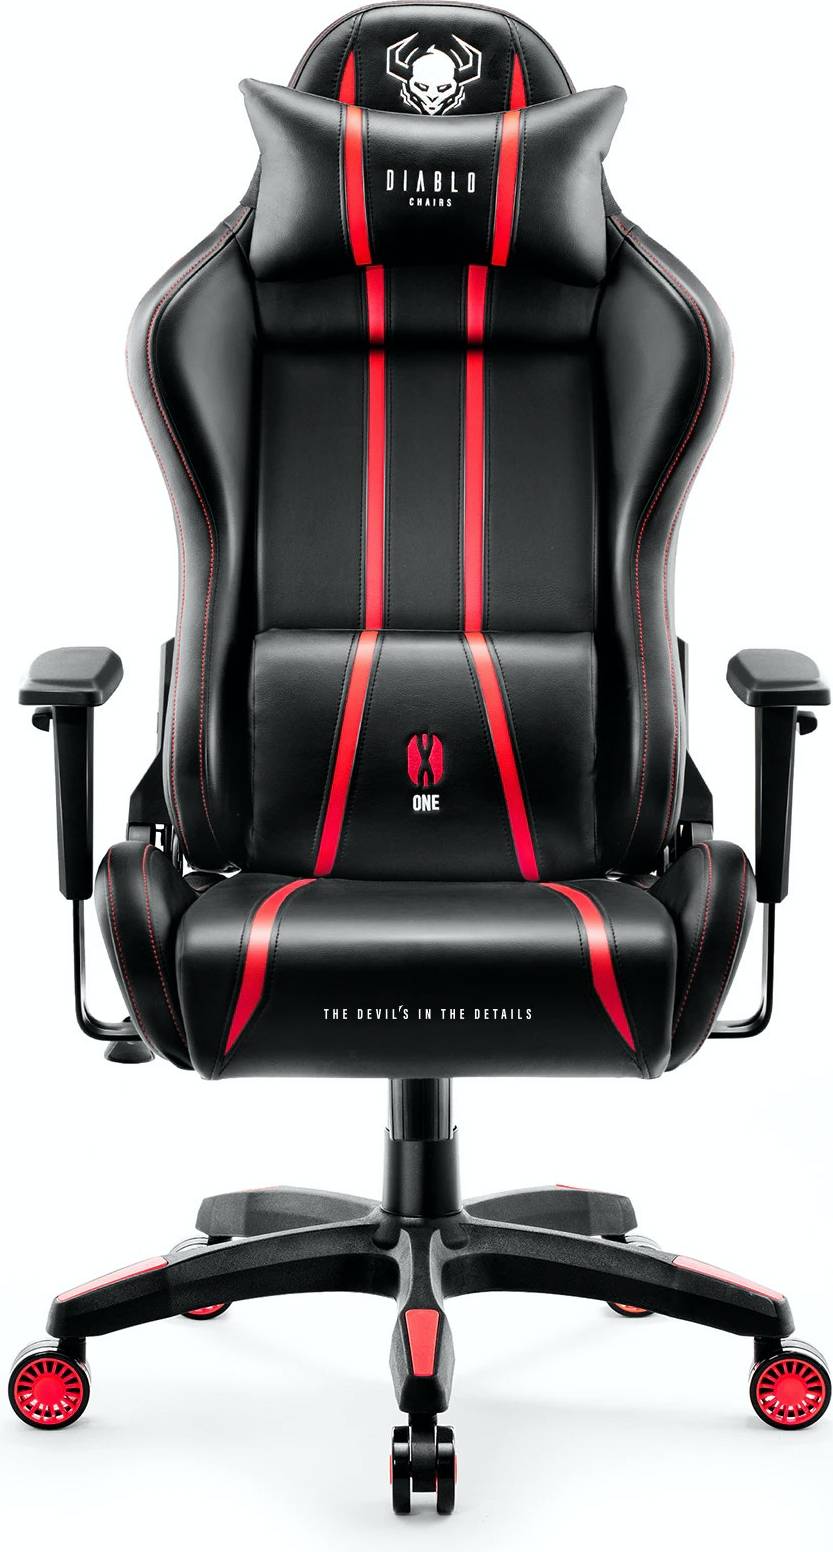  Bild på Diablo X-One 2.0 Normal Size Gaming Chair - Black/Red gamingstol